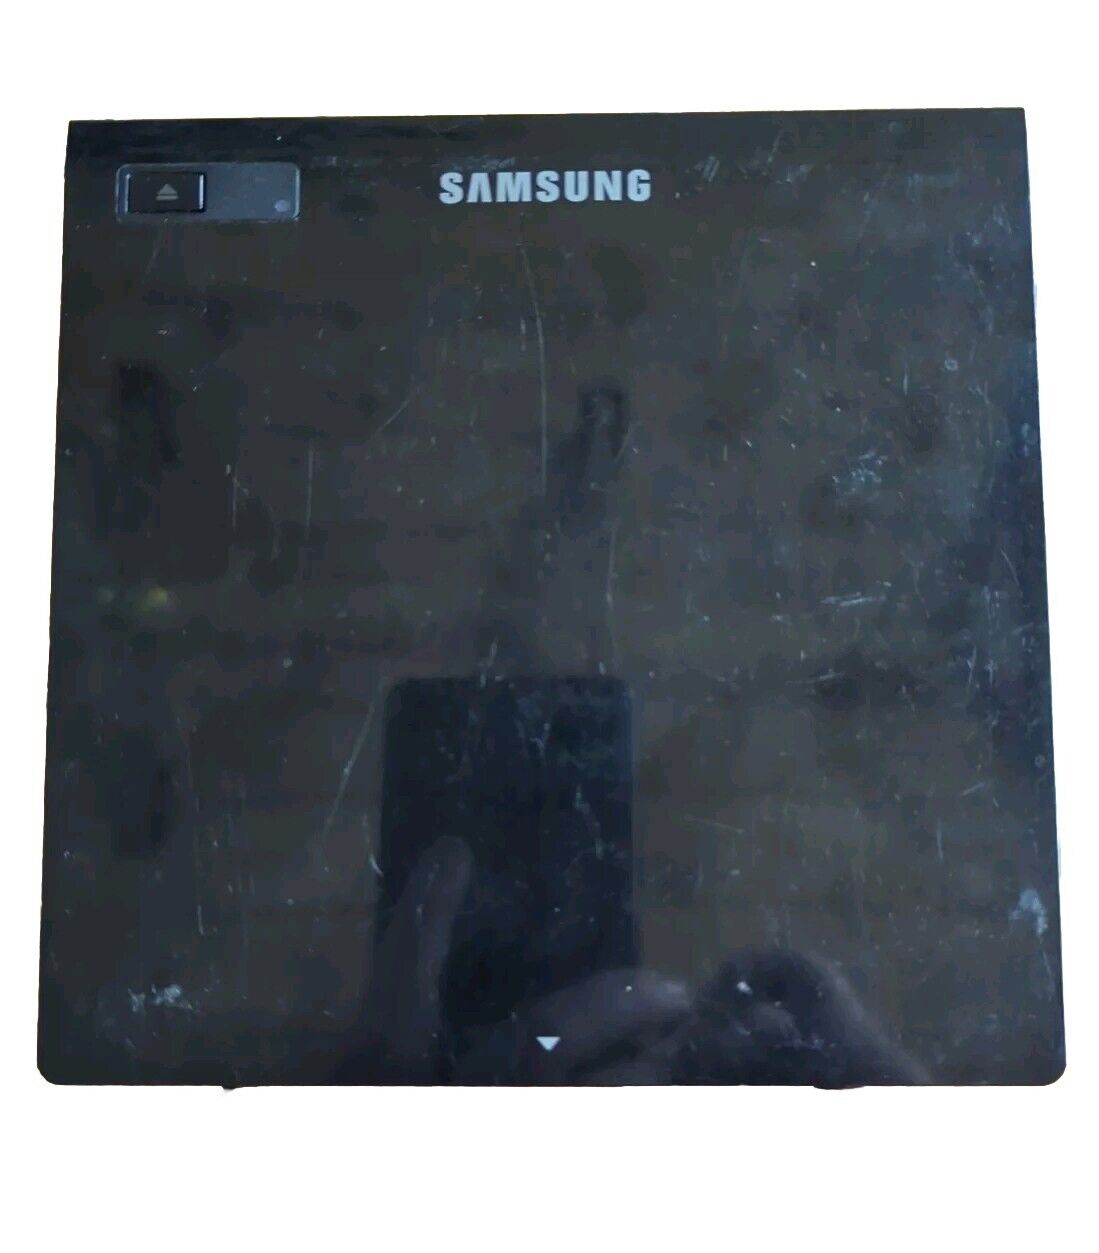 Genuine Samsung SE-208 Slim Portable DVD Writer External W Cord/Tested Works